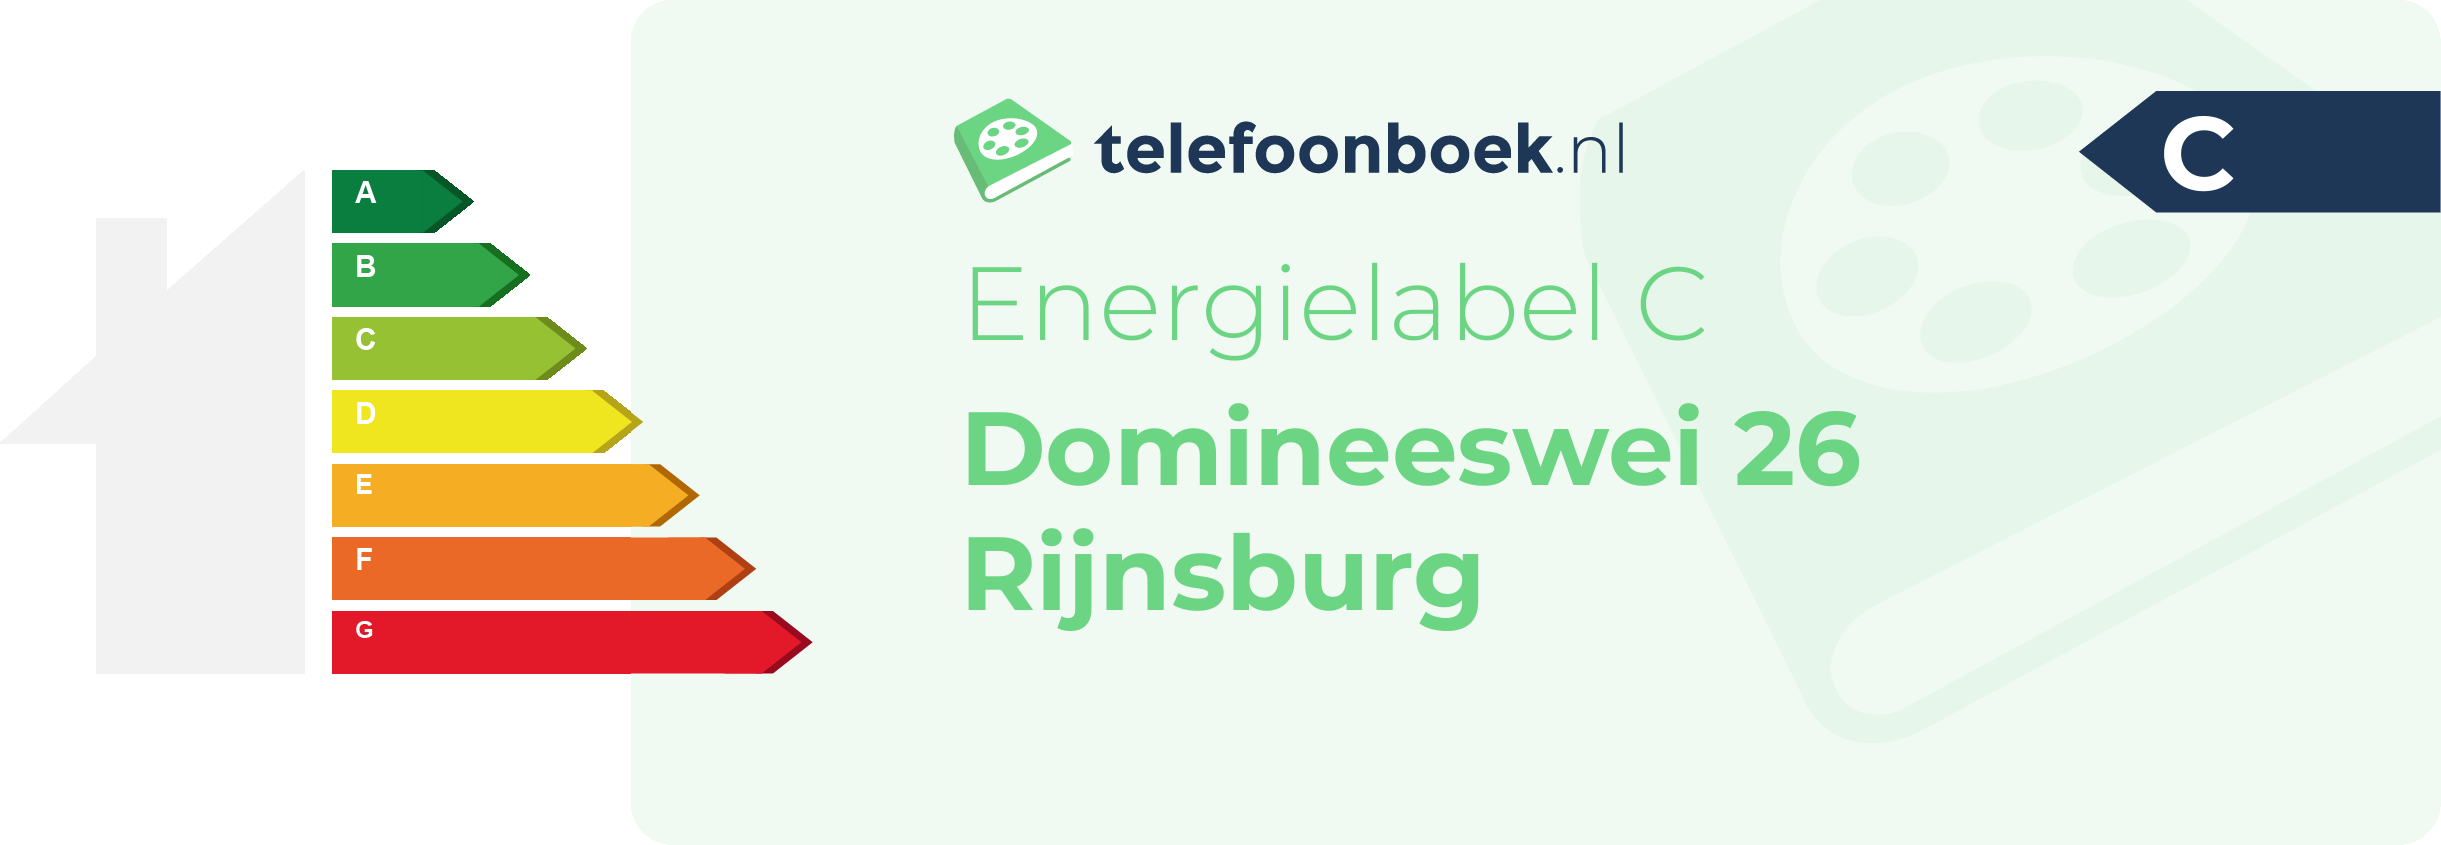 Energielabel Domineeswei 26 Rijnsburg